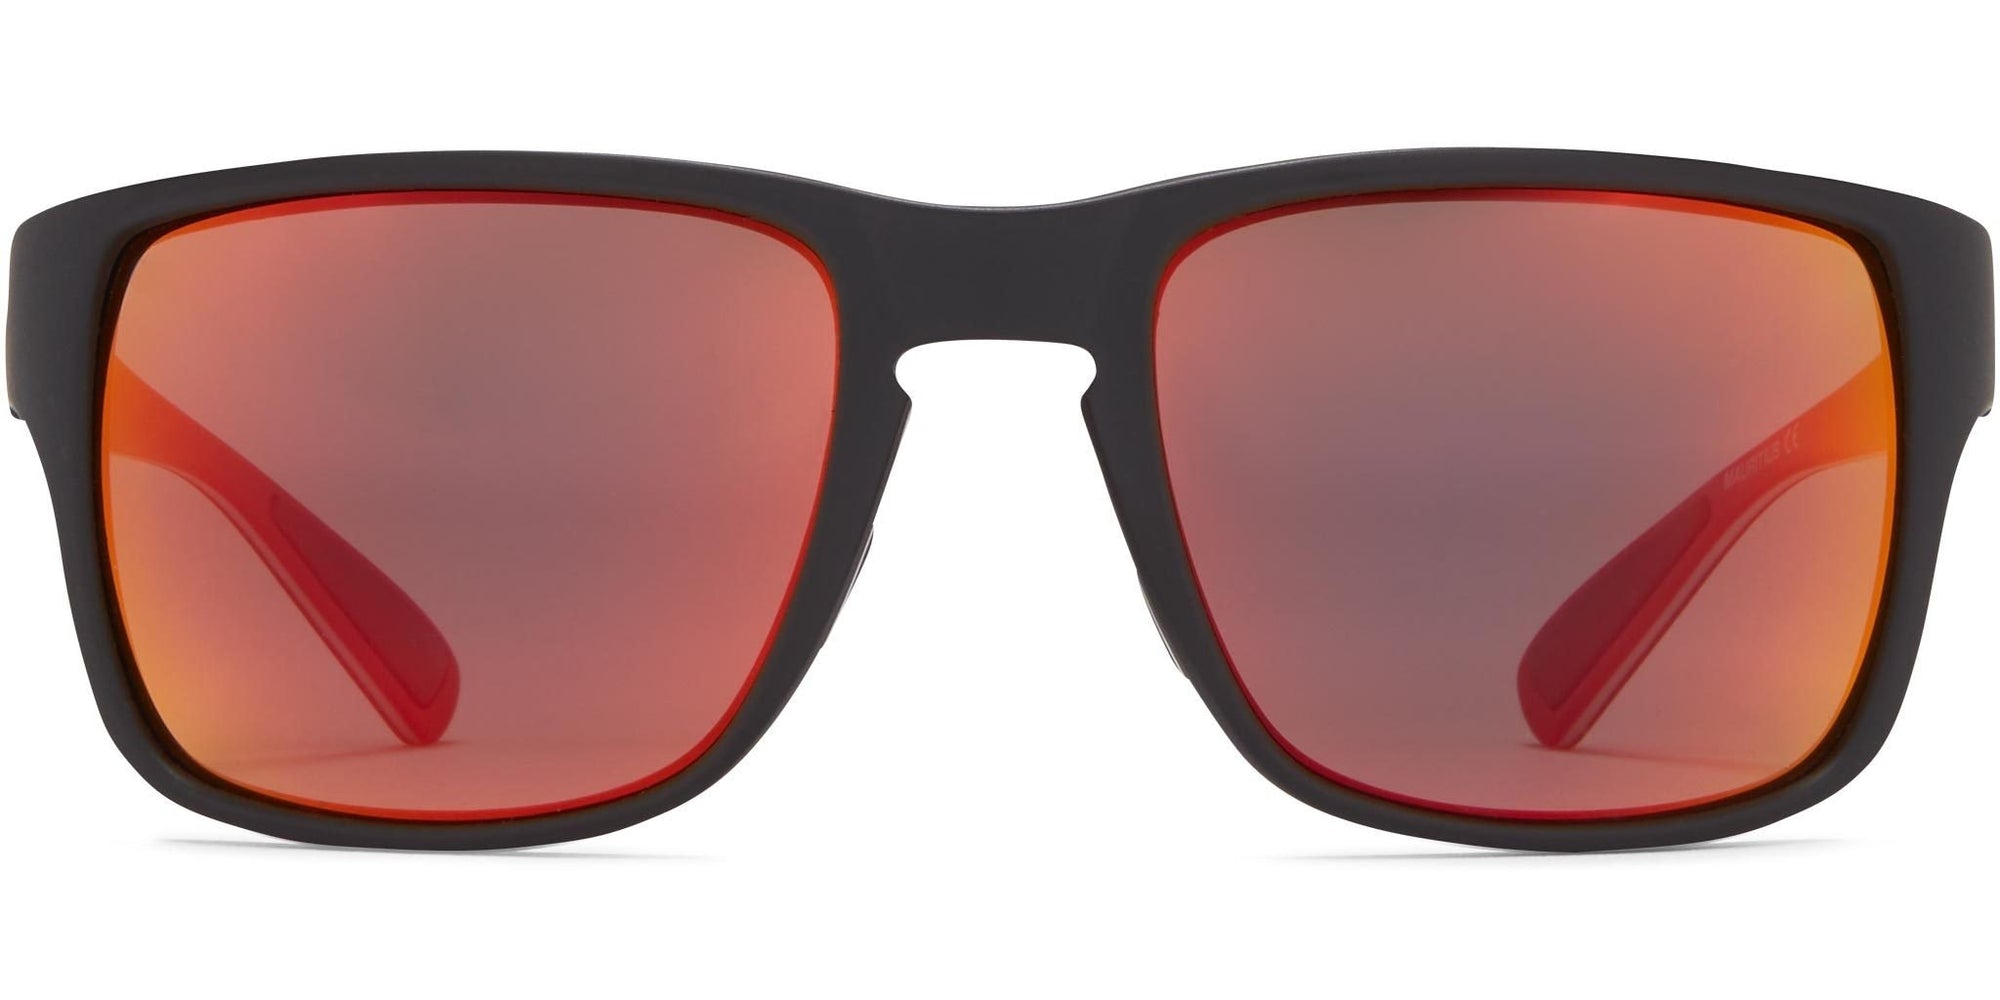 St. Louis Cardinals Sunglasses Retainer